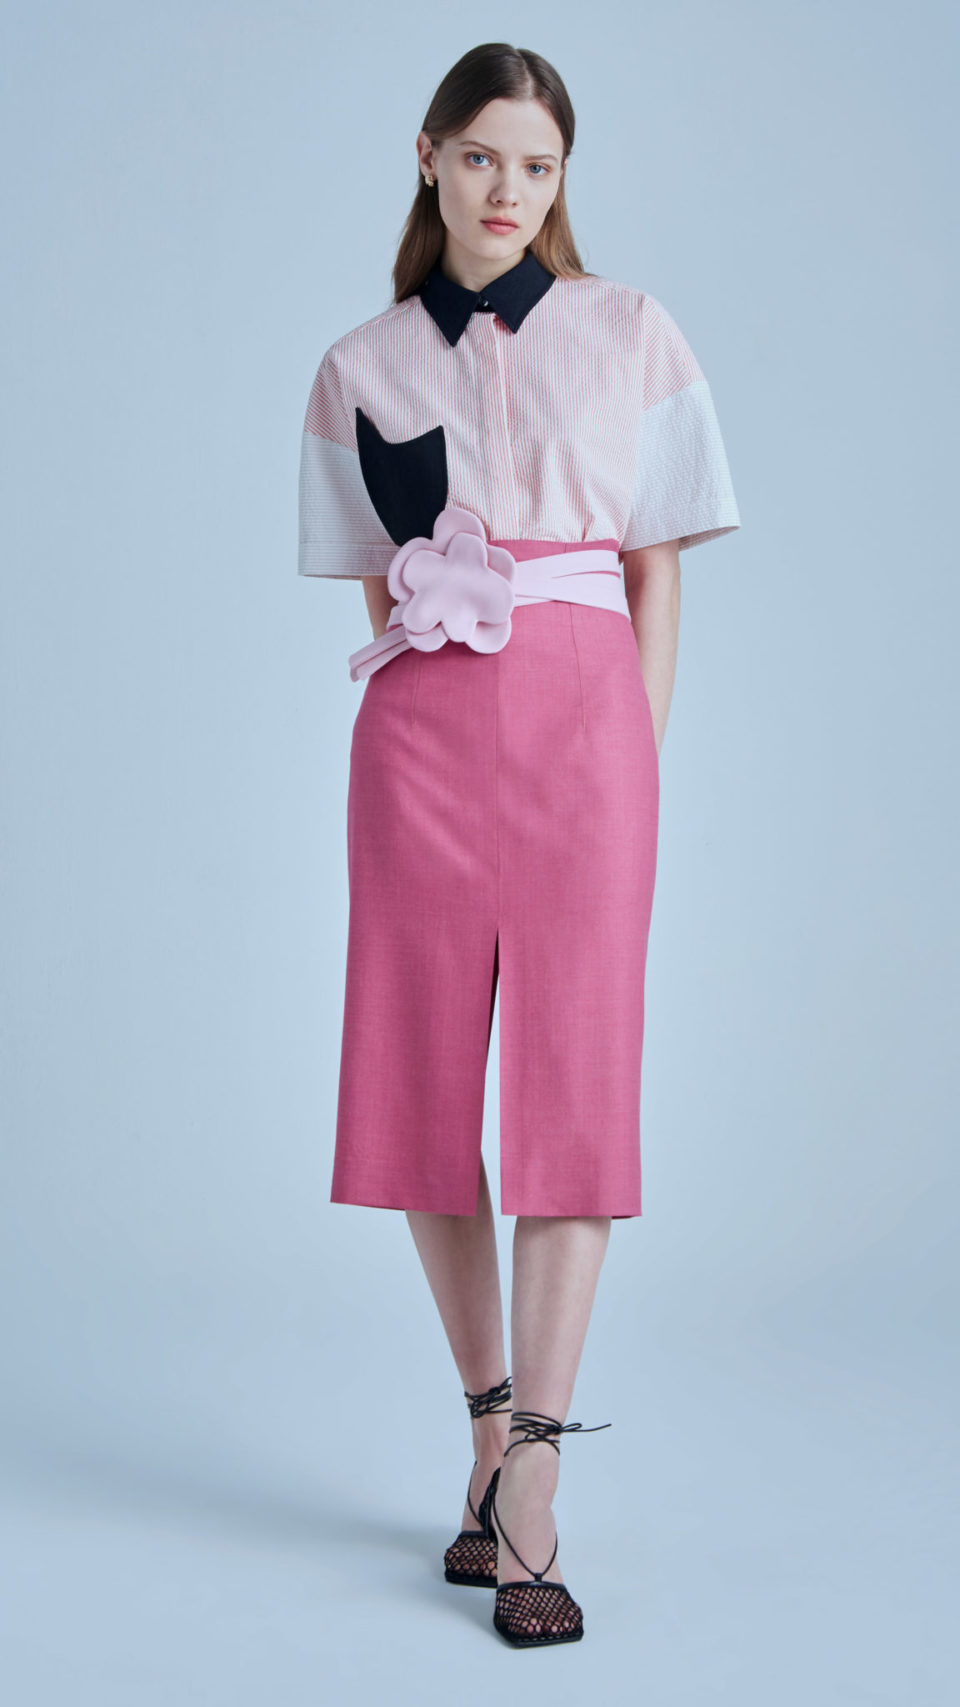 Pink seersucker shirt from MAR'S ready-to-wear spring/summer 2021